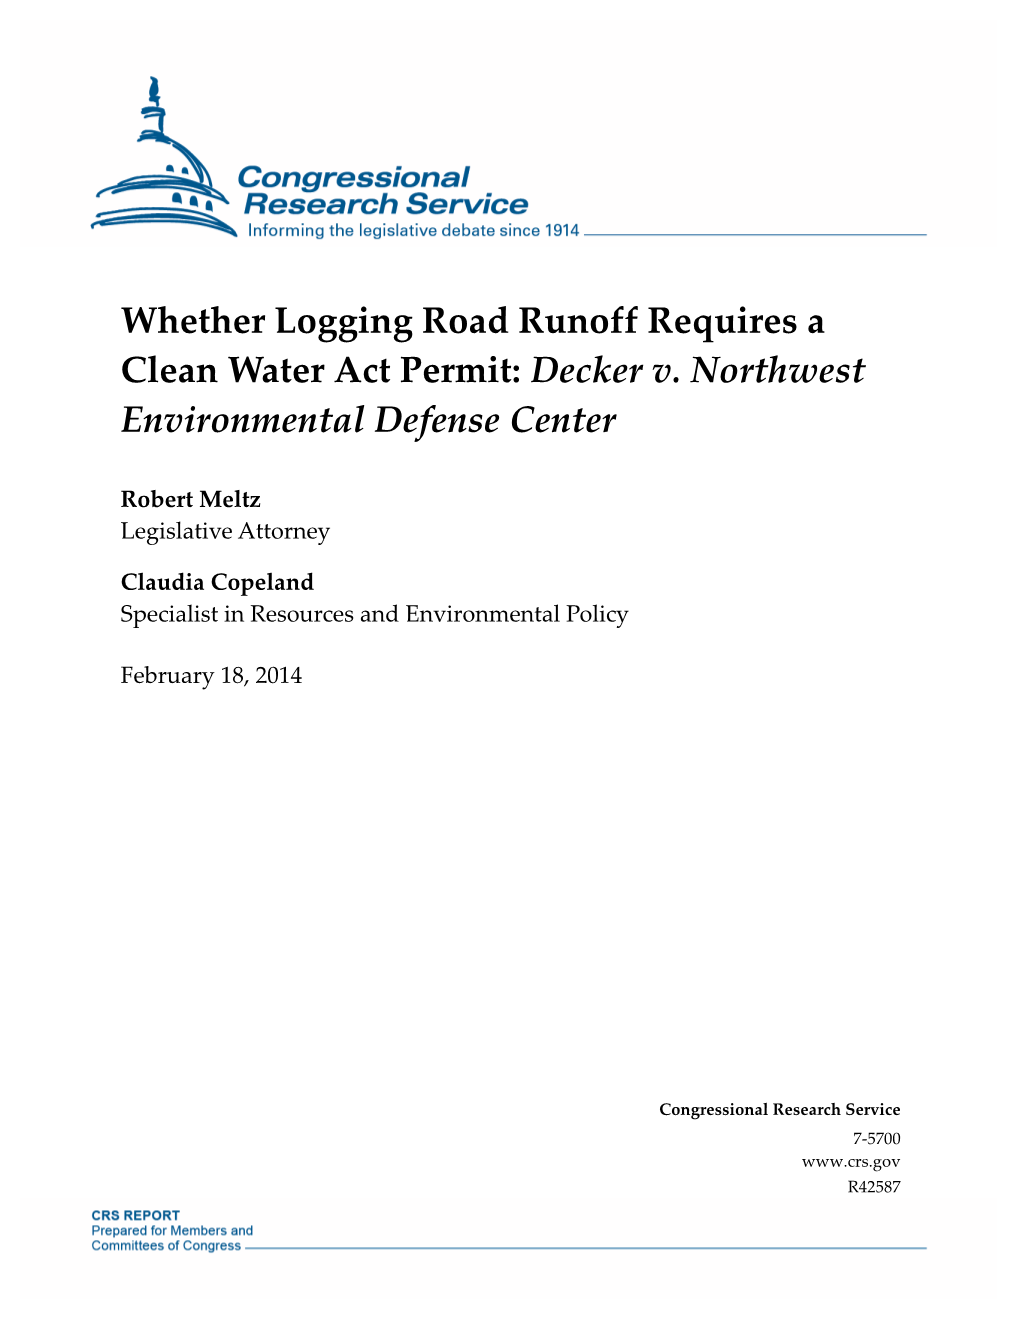 Whether Logging Road Runoff Requires a Clean Water Act Permit: Decker V. Northwest Environmental Defense Center